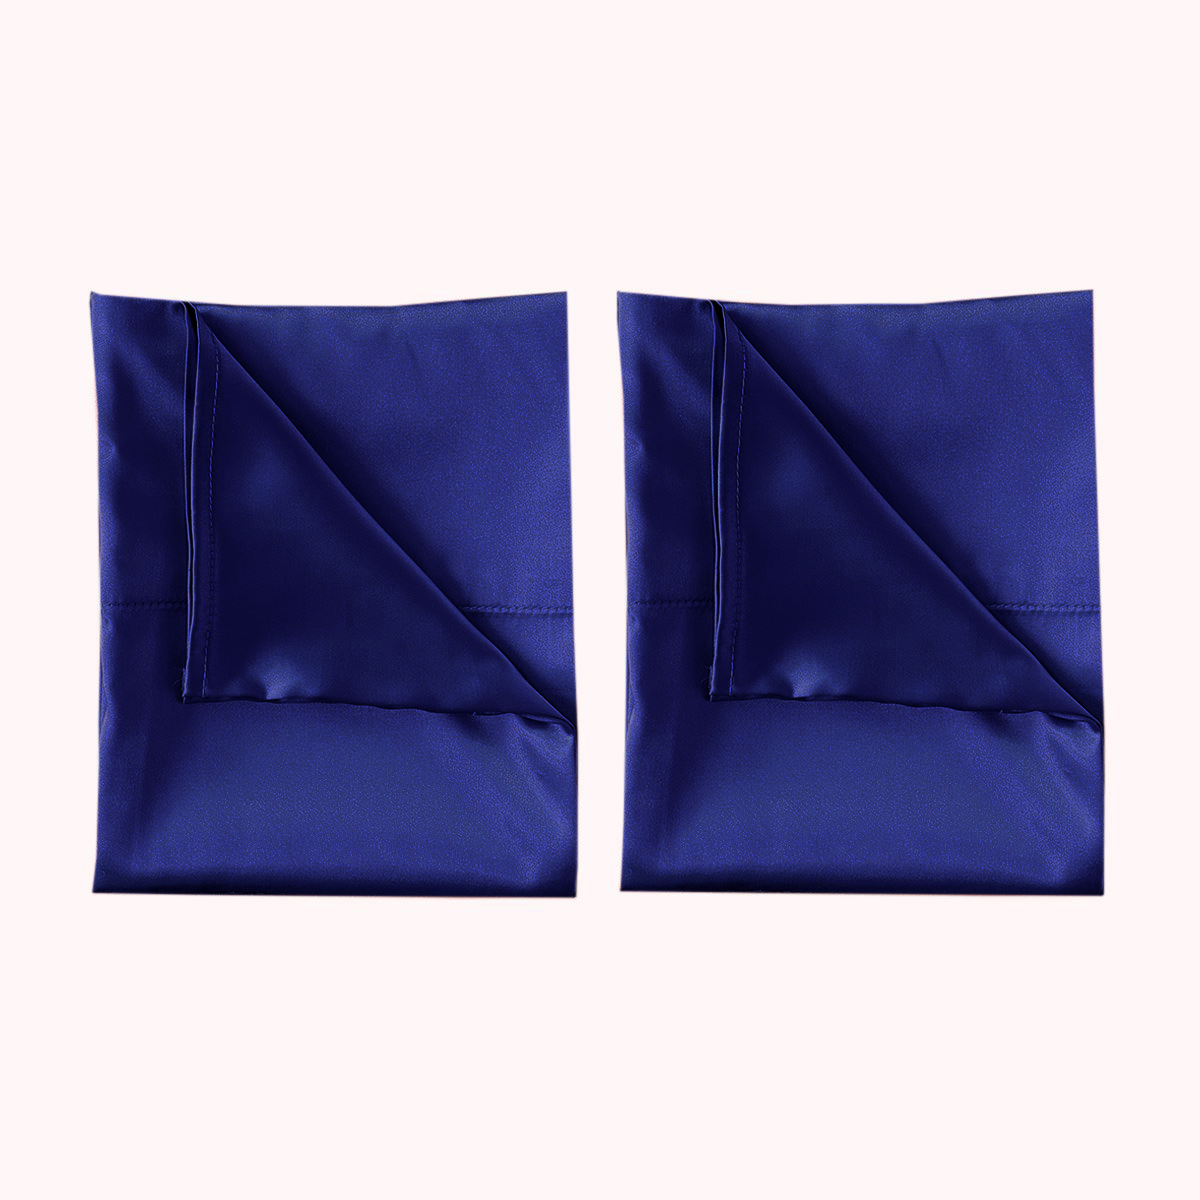 2 folded satin pillowcases in navy blue